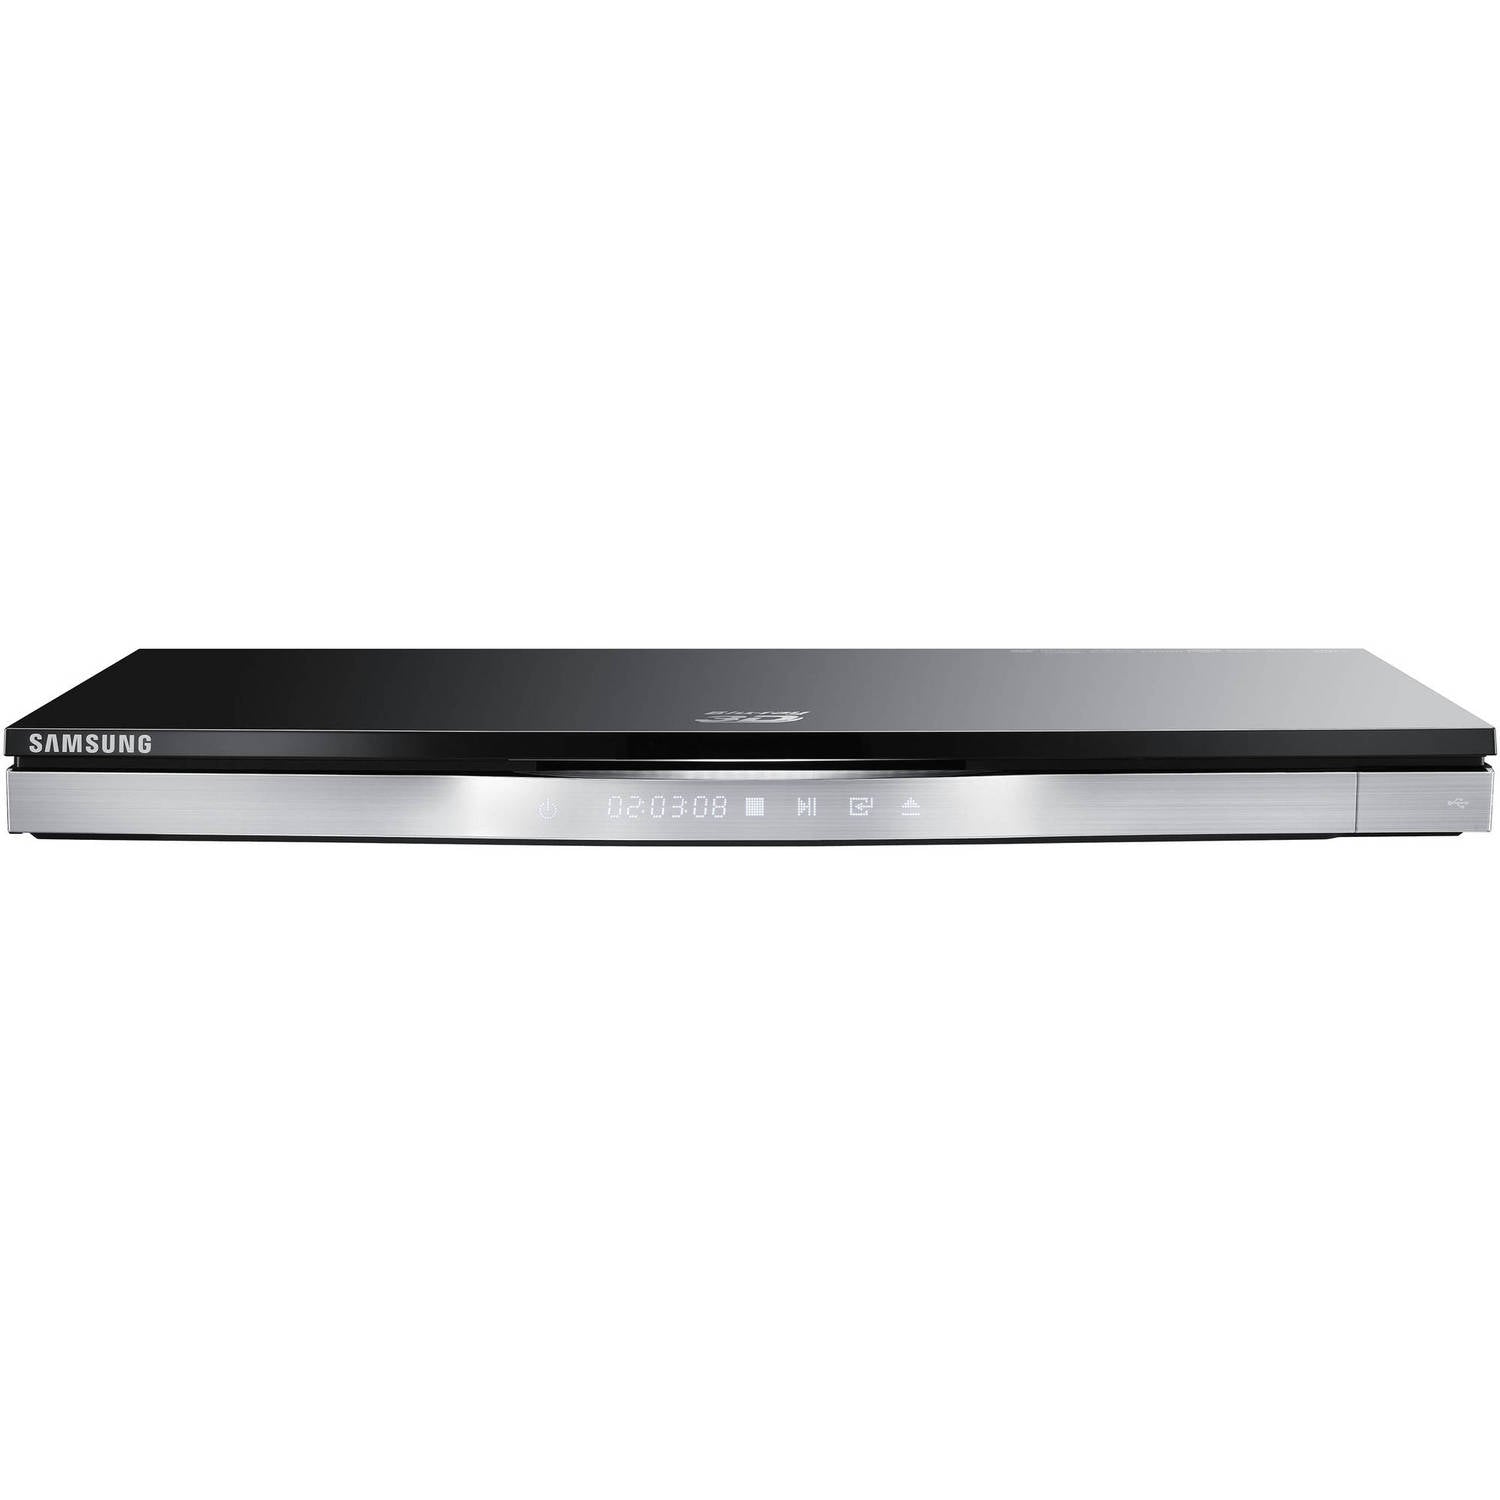 Samsung BDD6500 3D Blu-ray Disc Player (Black)